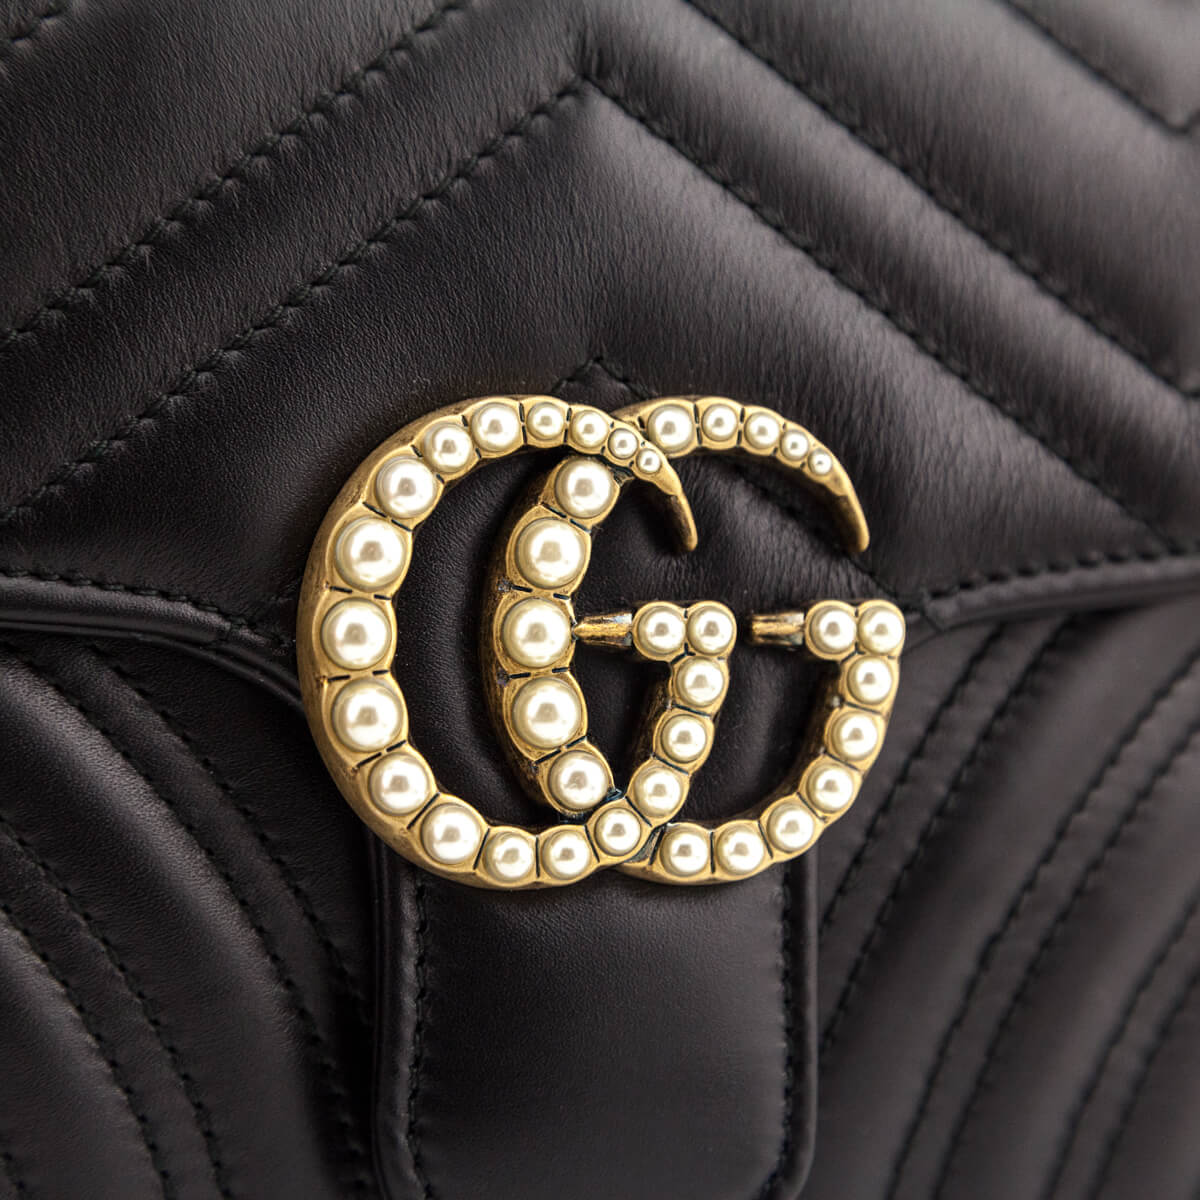 NWT Authentic Gucci Marmont Belt Bag Matelasse Chevron Black Leather Size  65/26